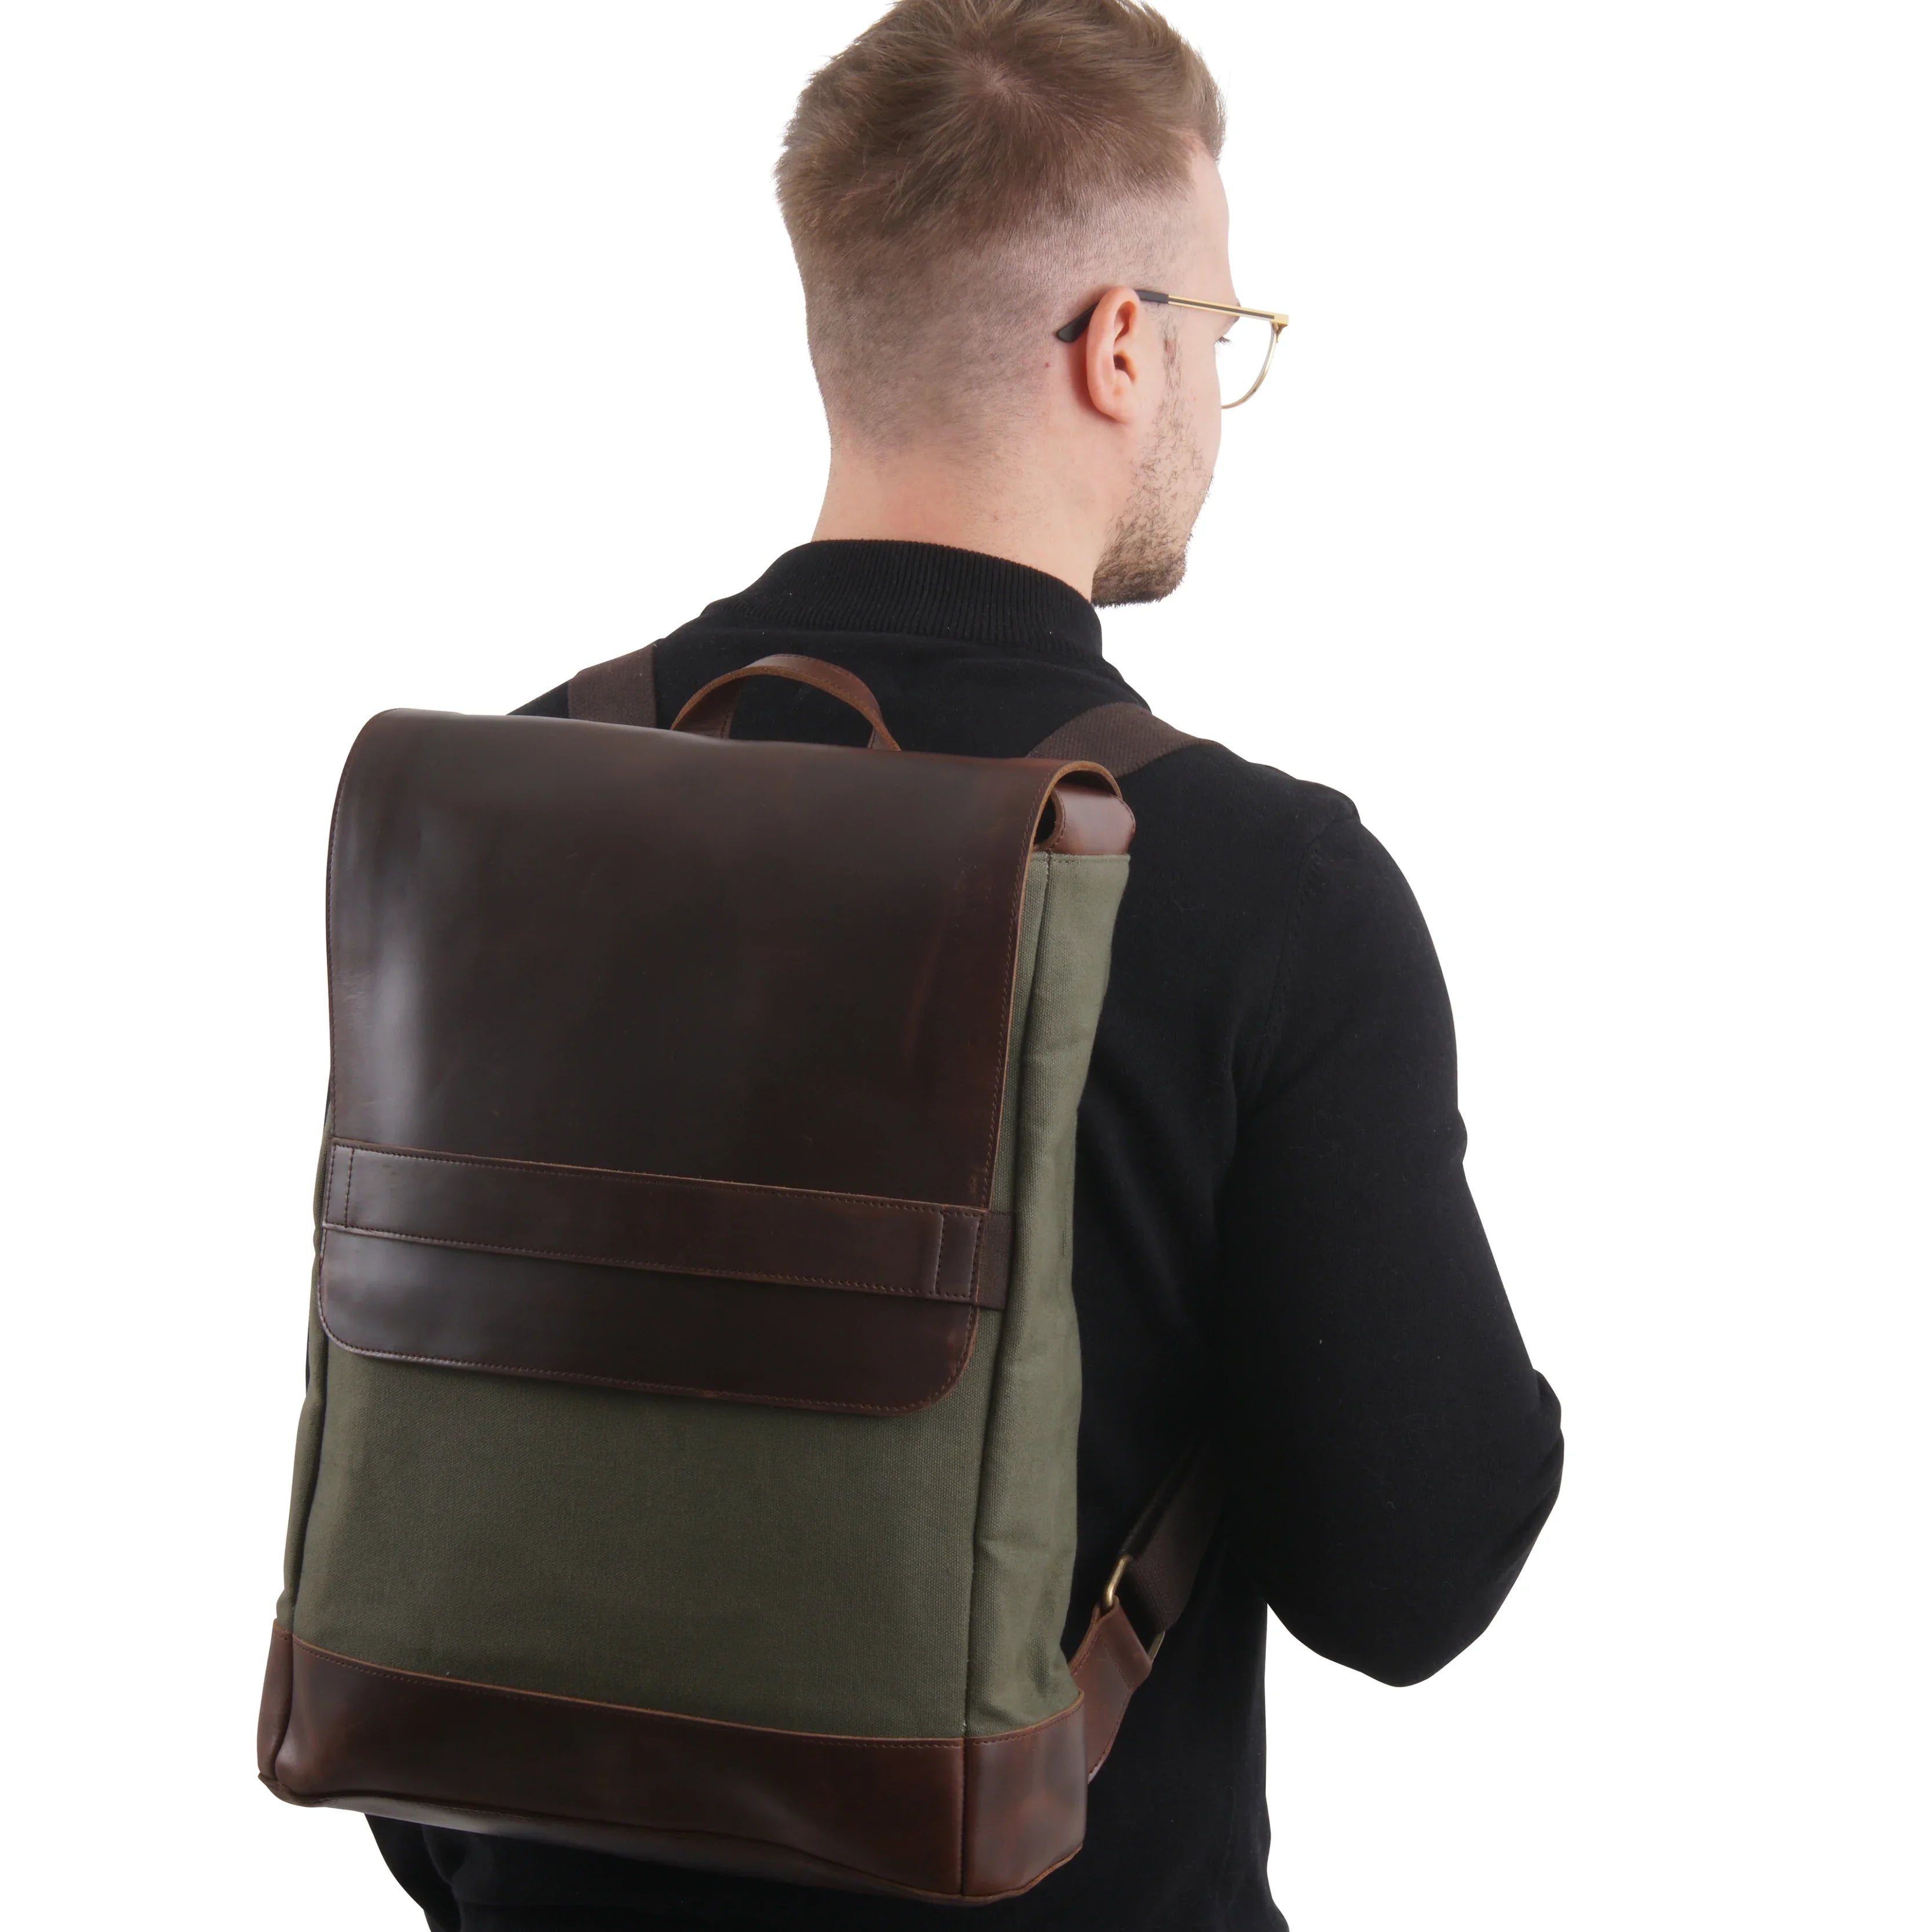 Buckle & Seam Bearpaw Backpack Annelotte 40 cm - Brown